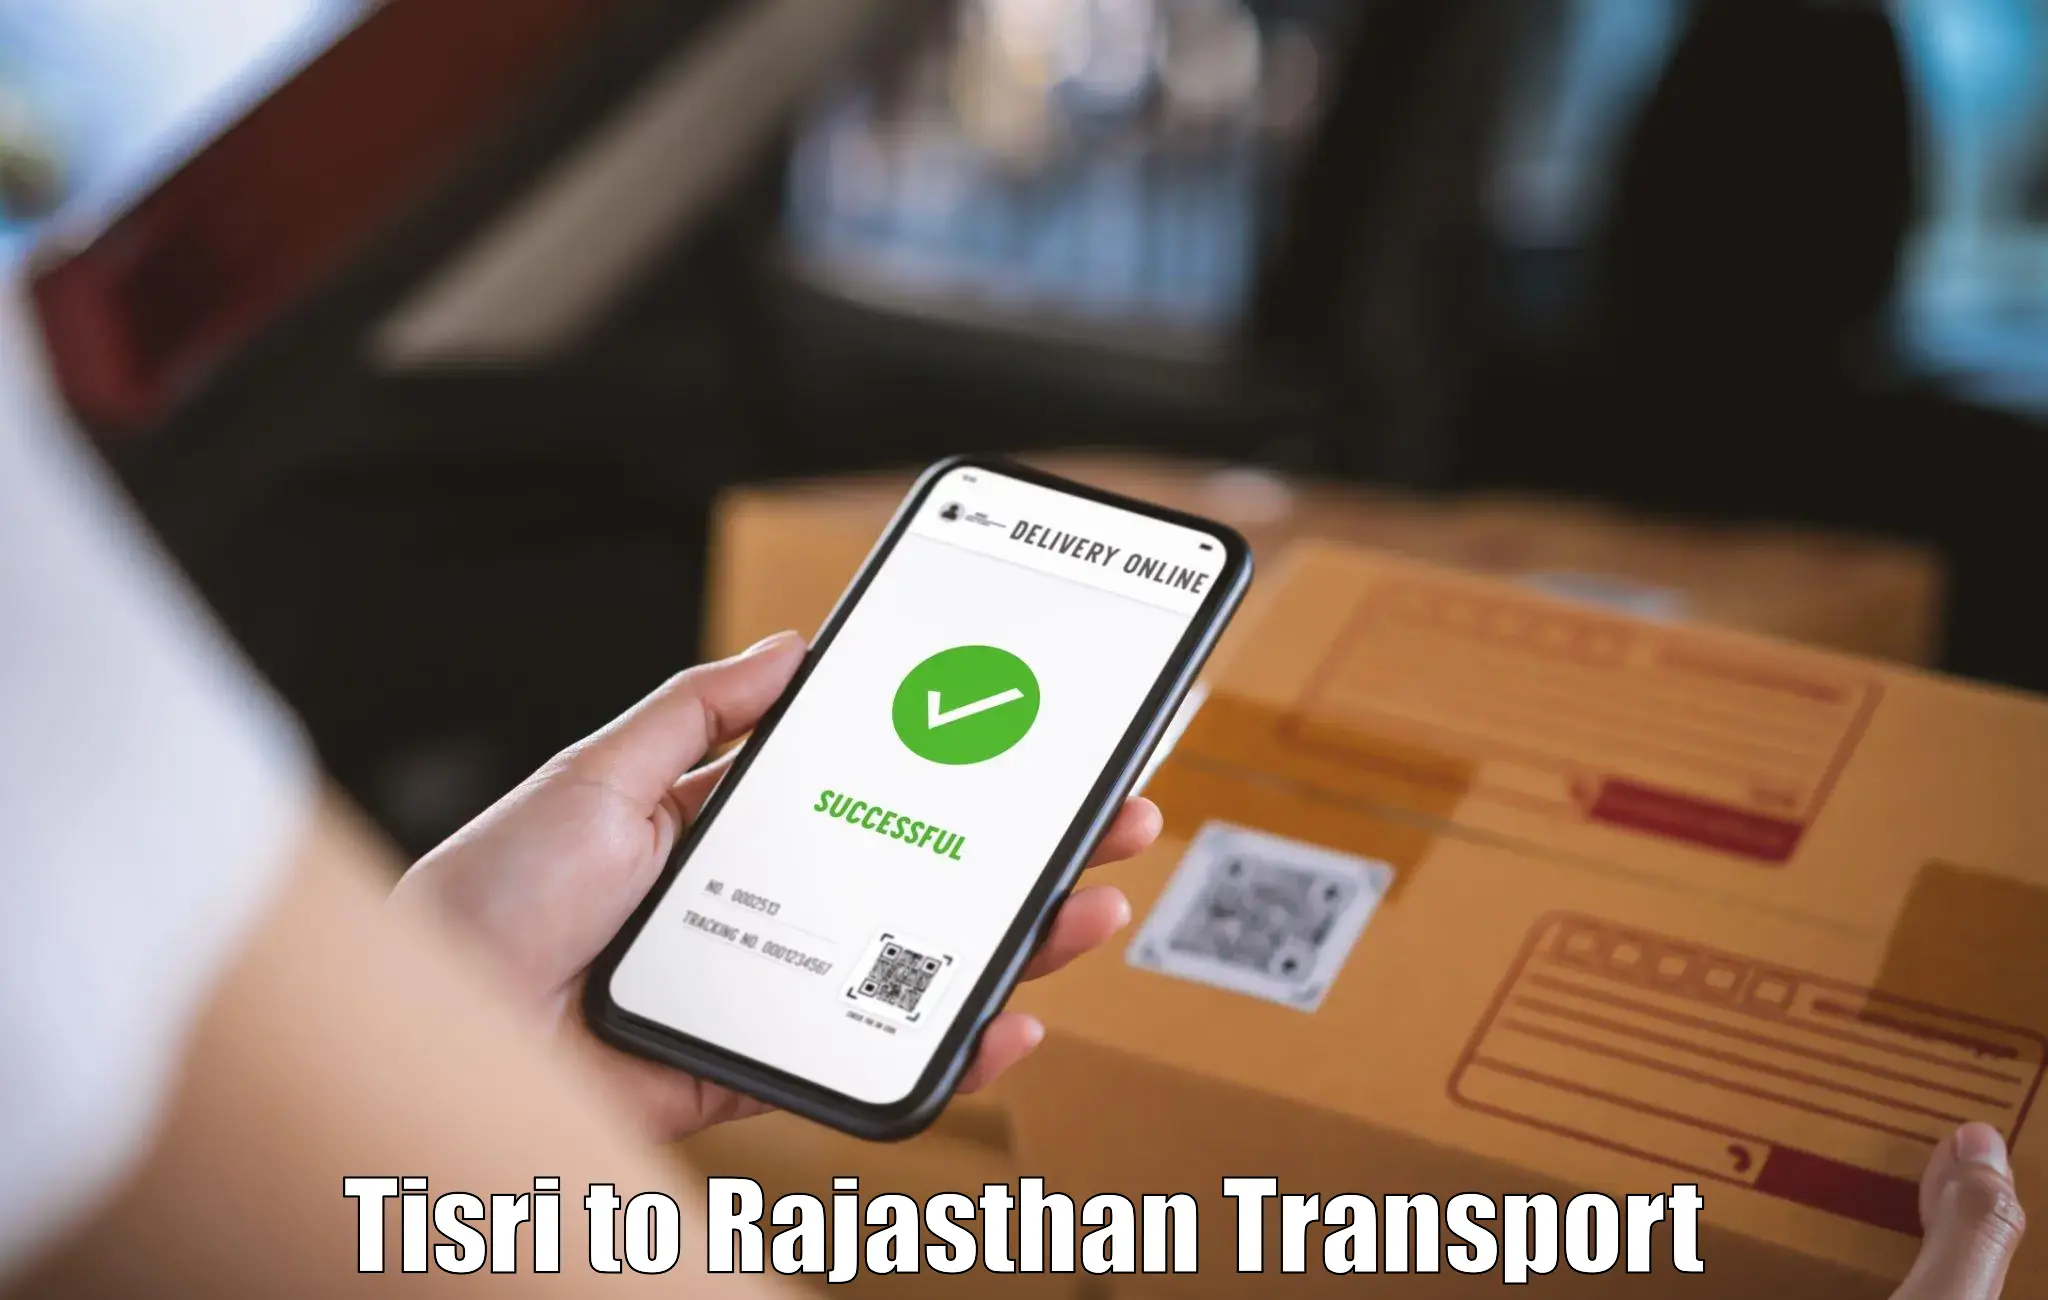 Transport in sharing Tisri to Rajsamand